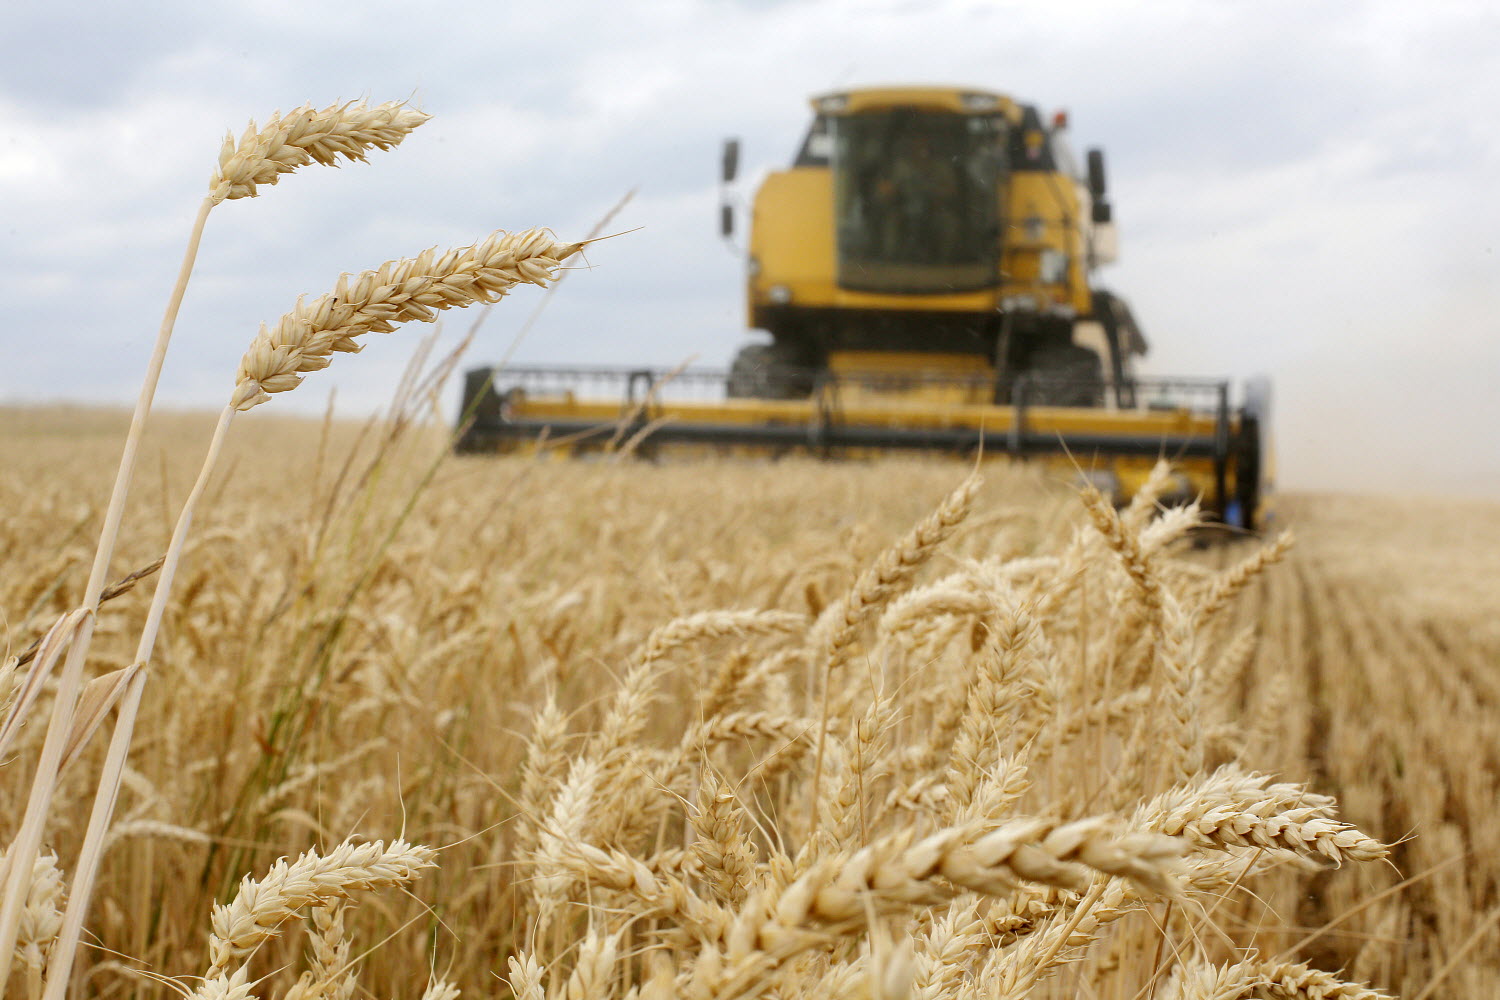 05 July 2019, Krasne, Ukraine - Combine harvester at work in a wheat field near Krasne village.